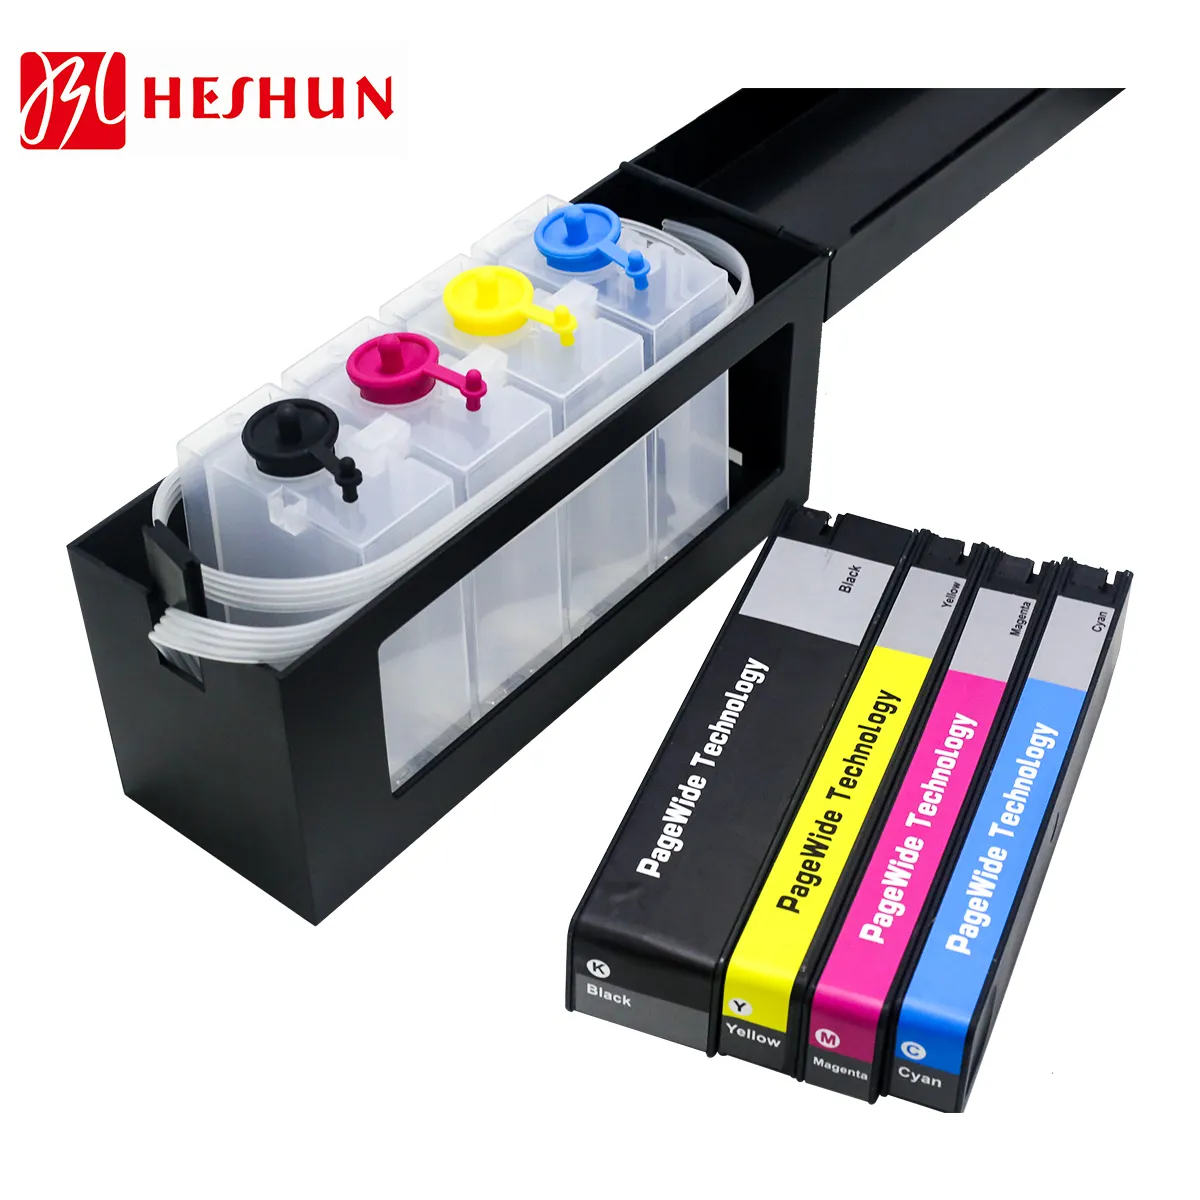 Heshun-impresora 972 973 974 975 97U CISS para ordenador de escritorio, máquina para imprimir, 352dw/377dw/452dn/452dw/477dn/477dw/552dw/ 577dw/57z/P55250dw/DW